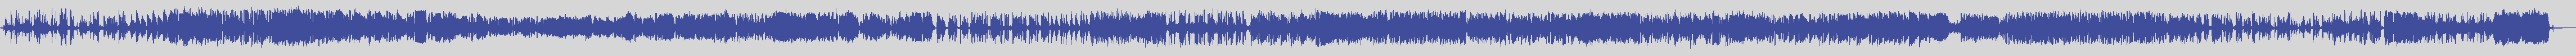 digiphonic_records [DPR010] Judy Garland, Gene Kelly - World War One Medley [Original Mix] audio wave form